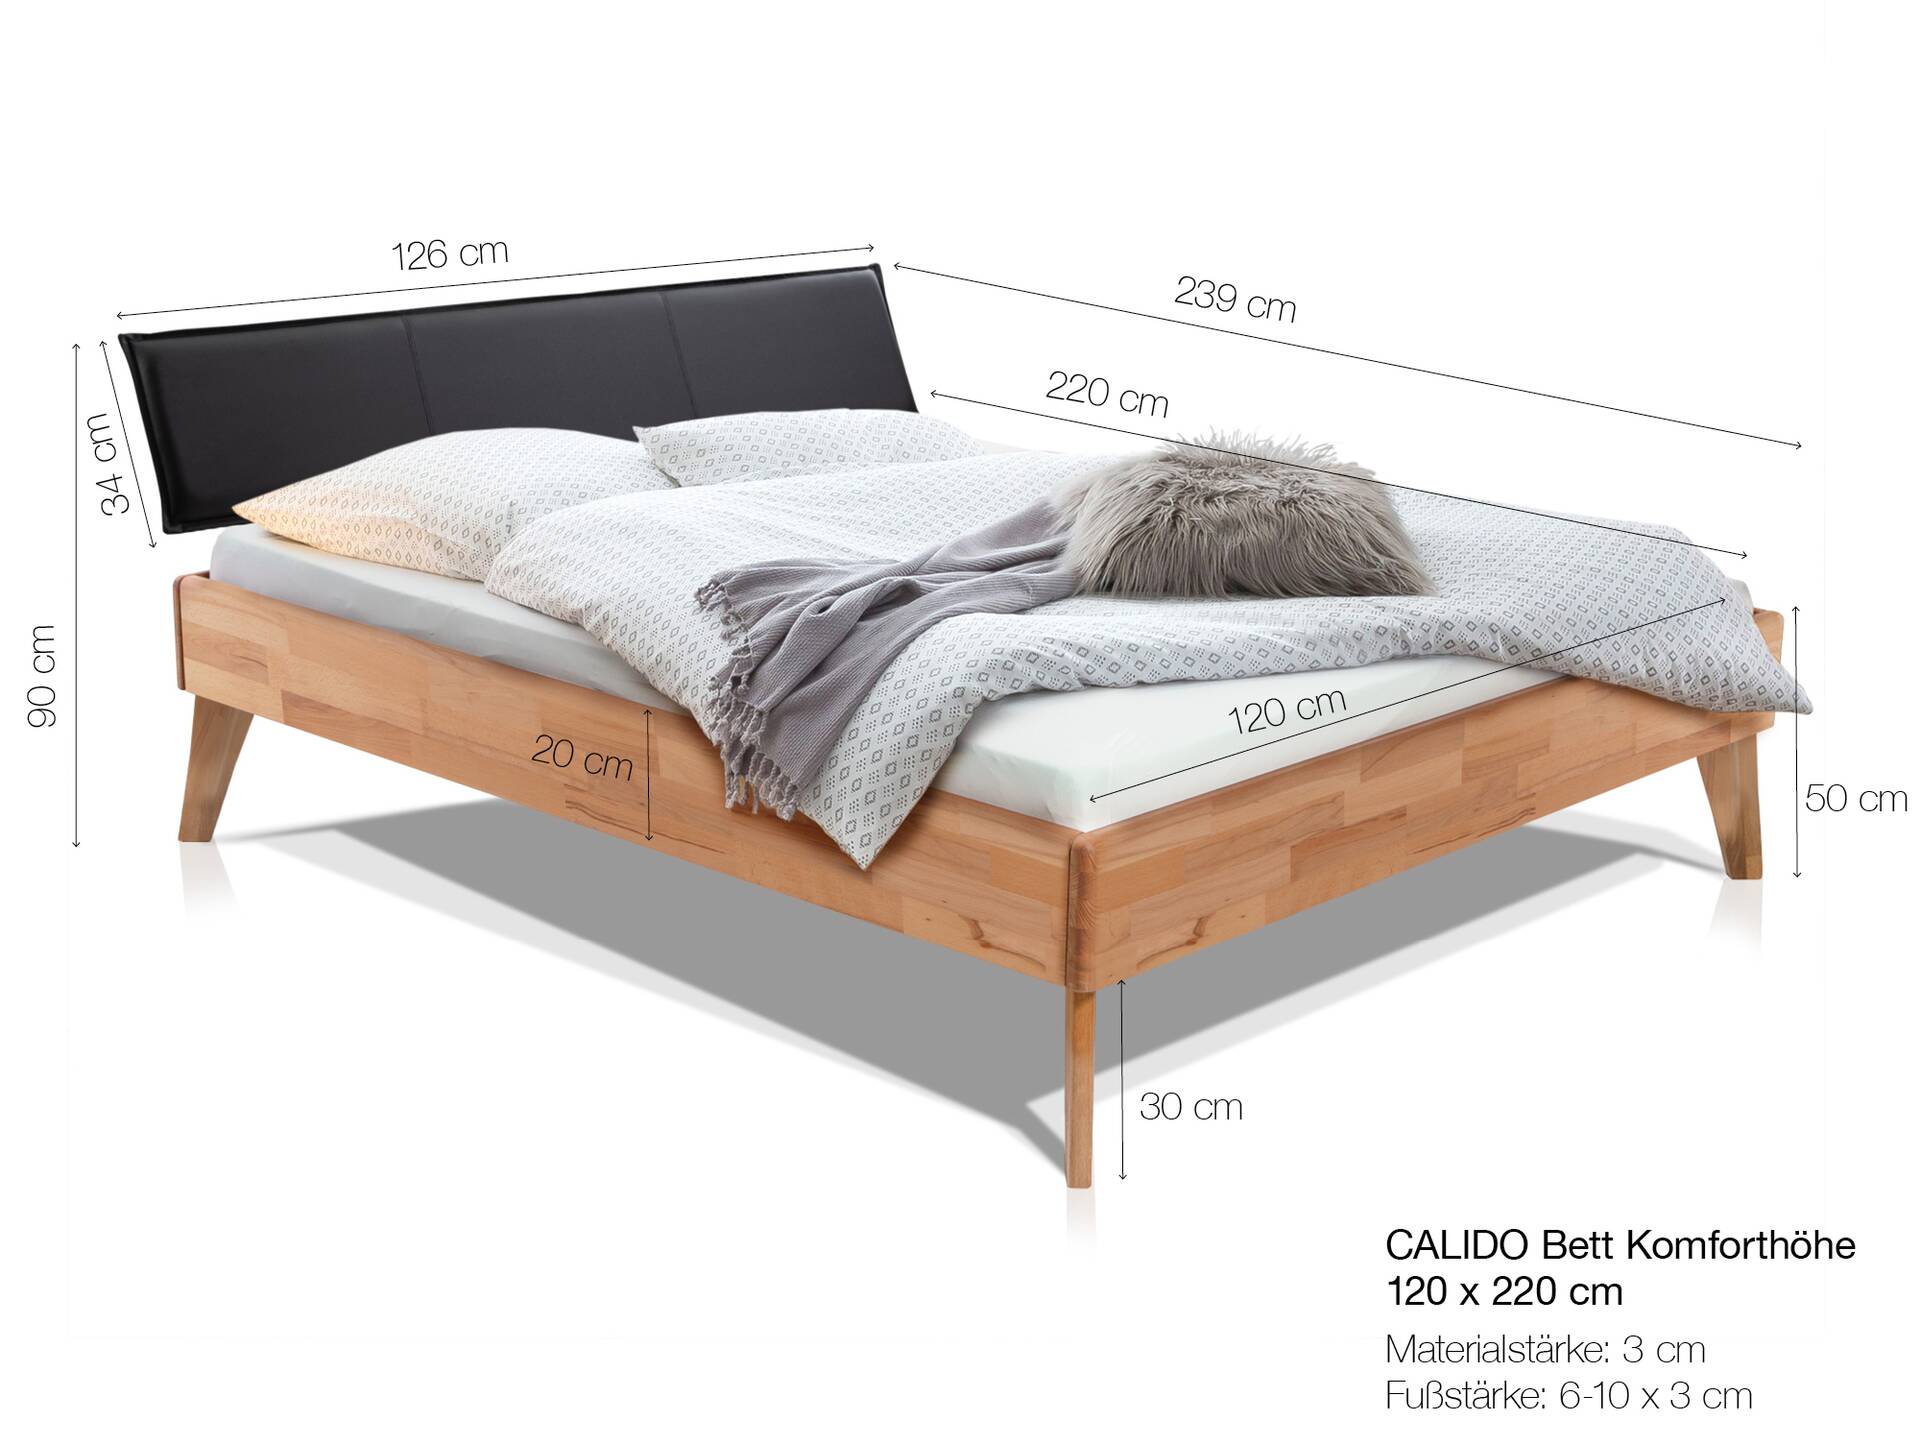 CALIDO 4-Fuß-Bett mit Polster-Kopfteil, Material Massivholz 120 x 220 cm | Buche weiss lackiert | Stoff Anthrazit | Komforthöhe